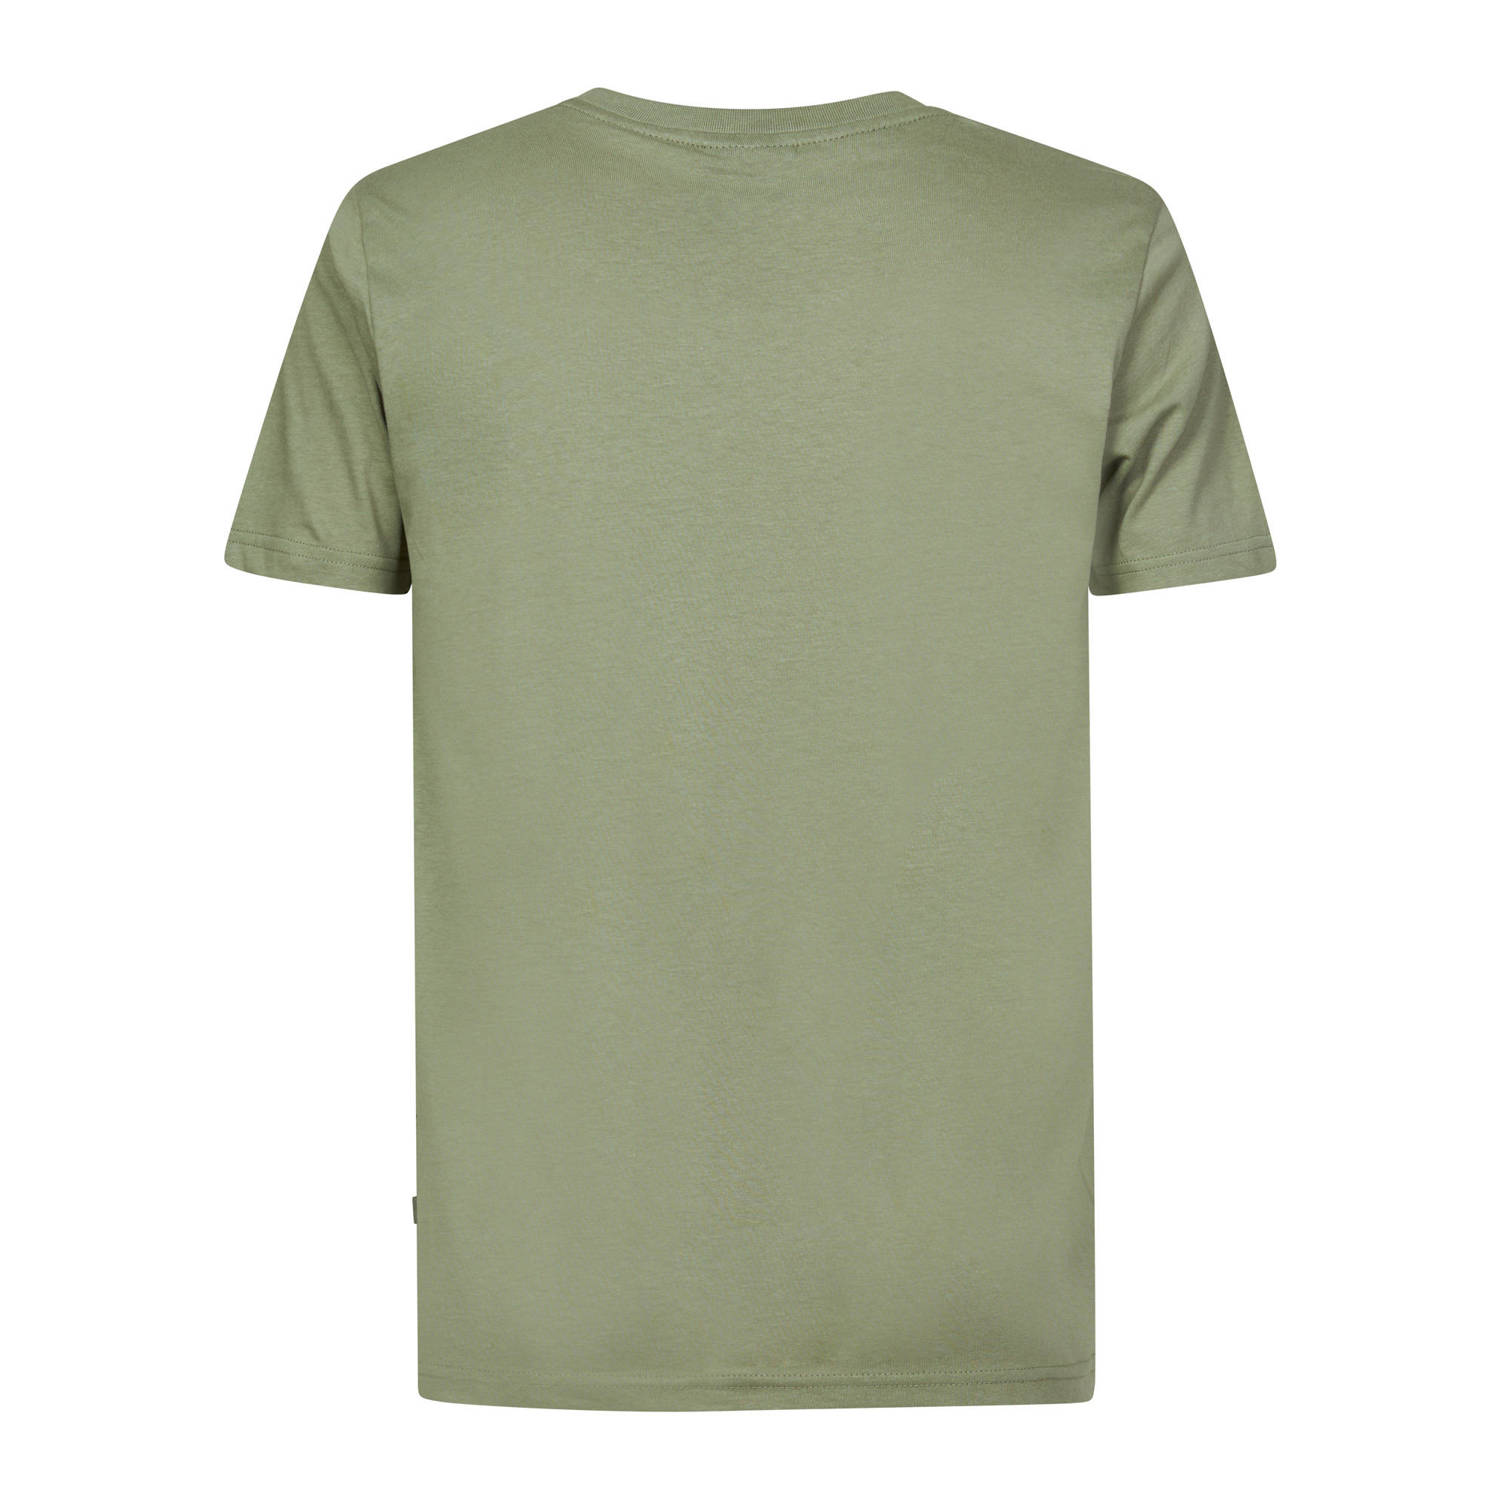 Petrol Industries T-shirt met printopdruk sage green